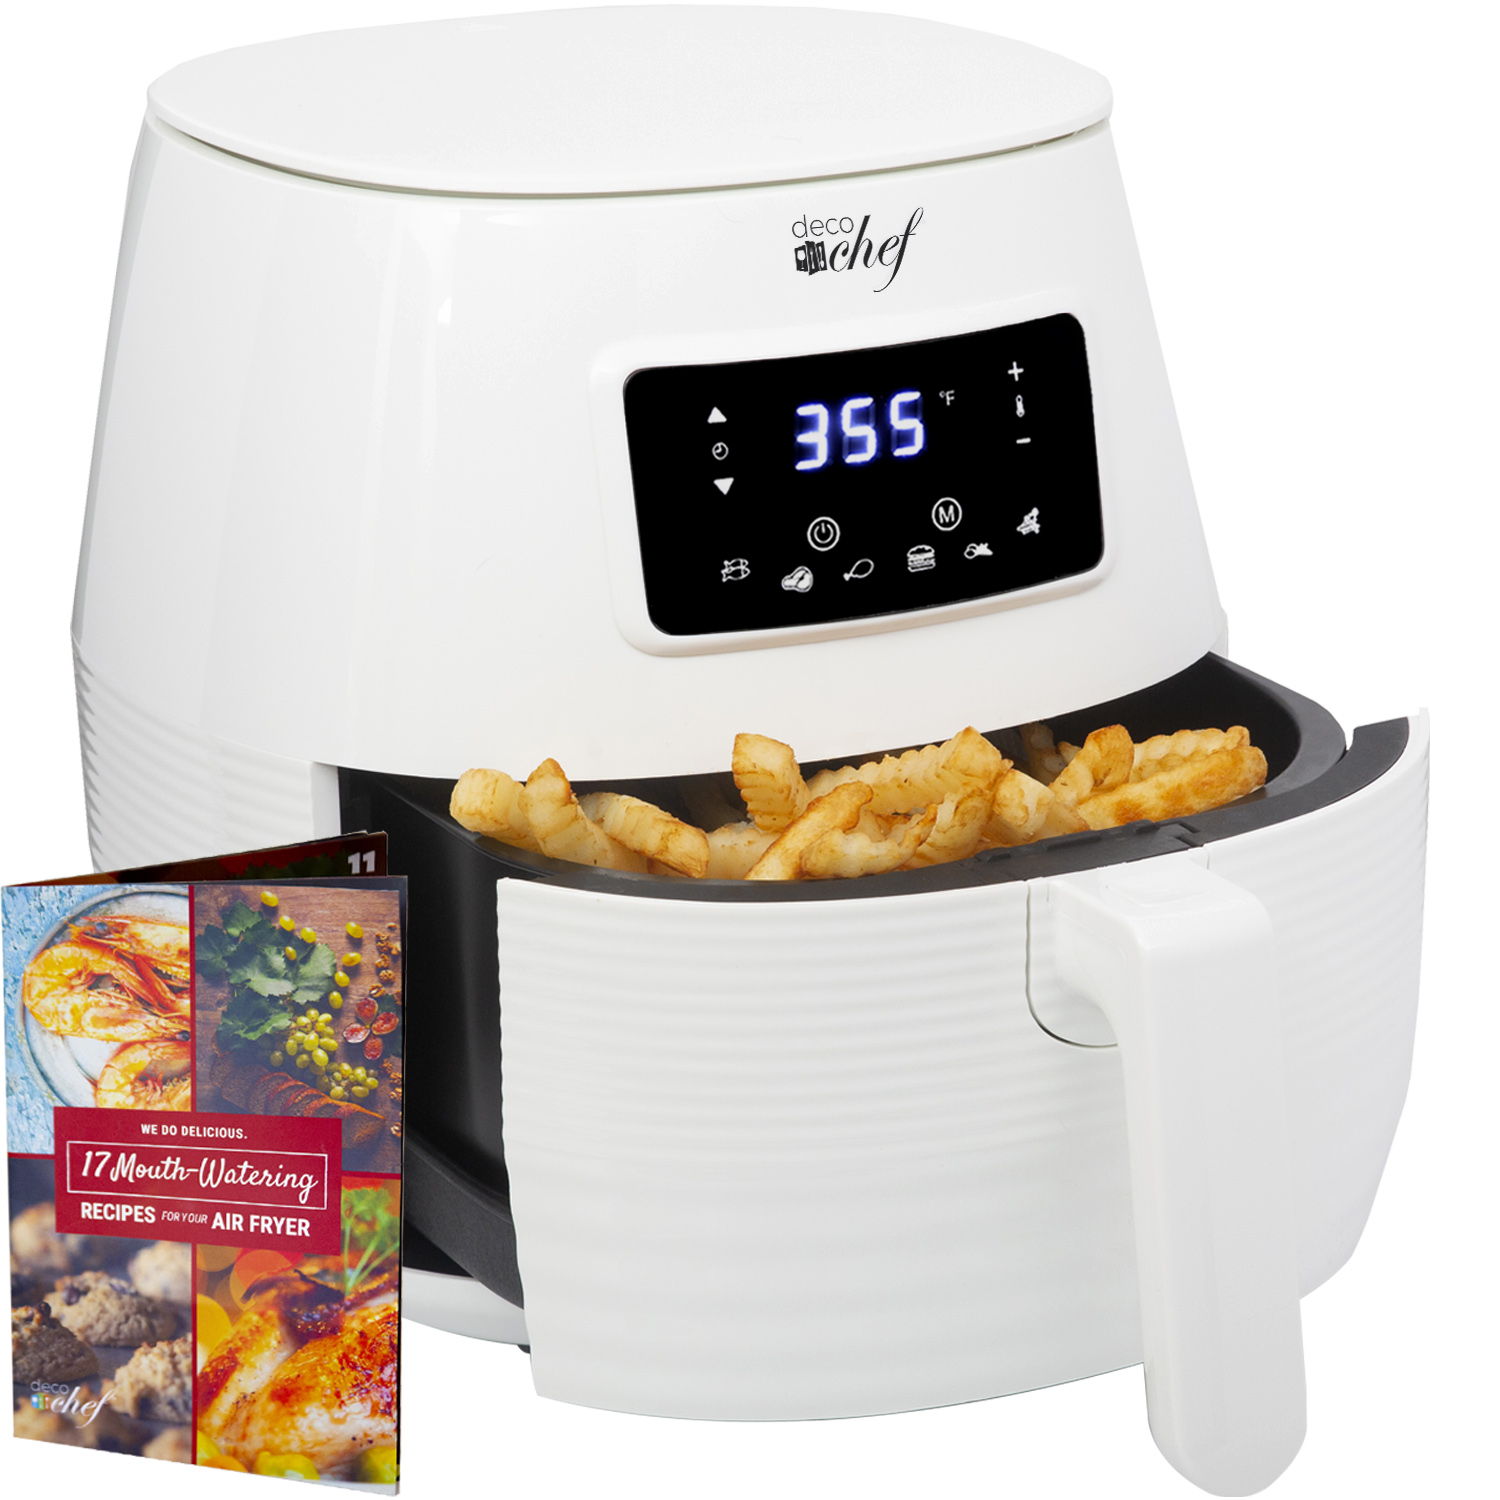 Deco Chef Digital 5.8QT Electric Air Fryer | Healthier & Fas